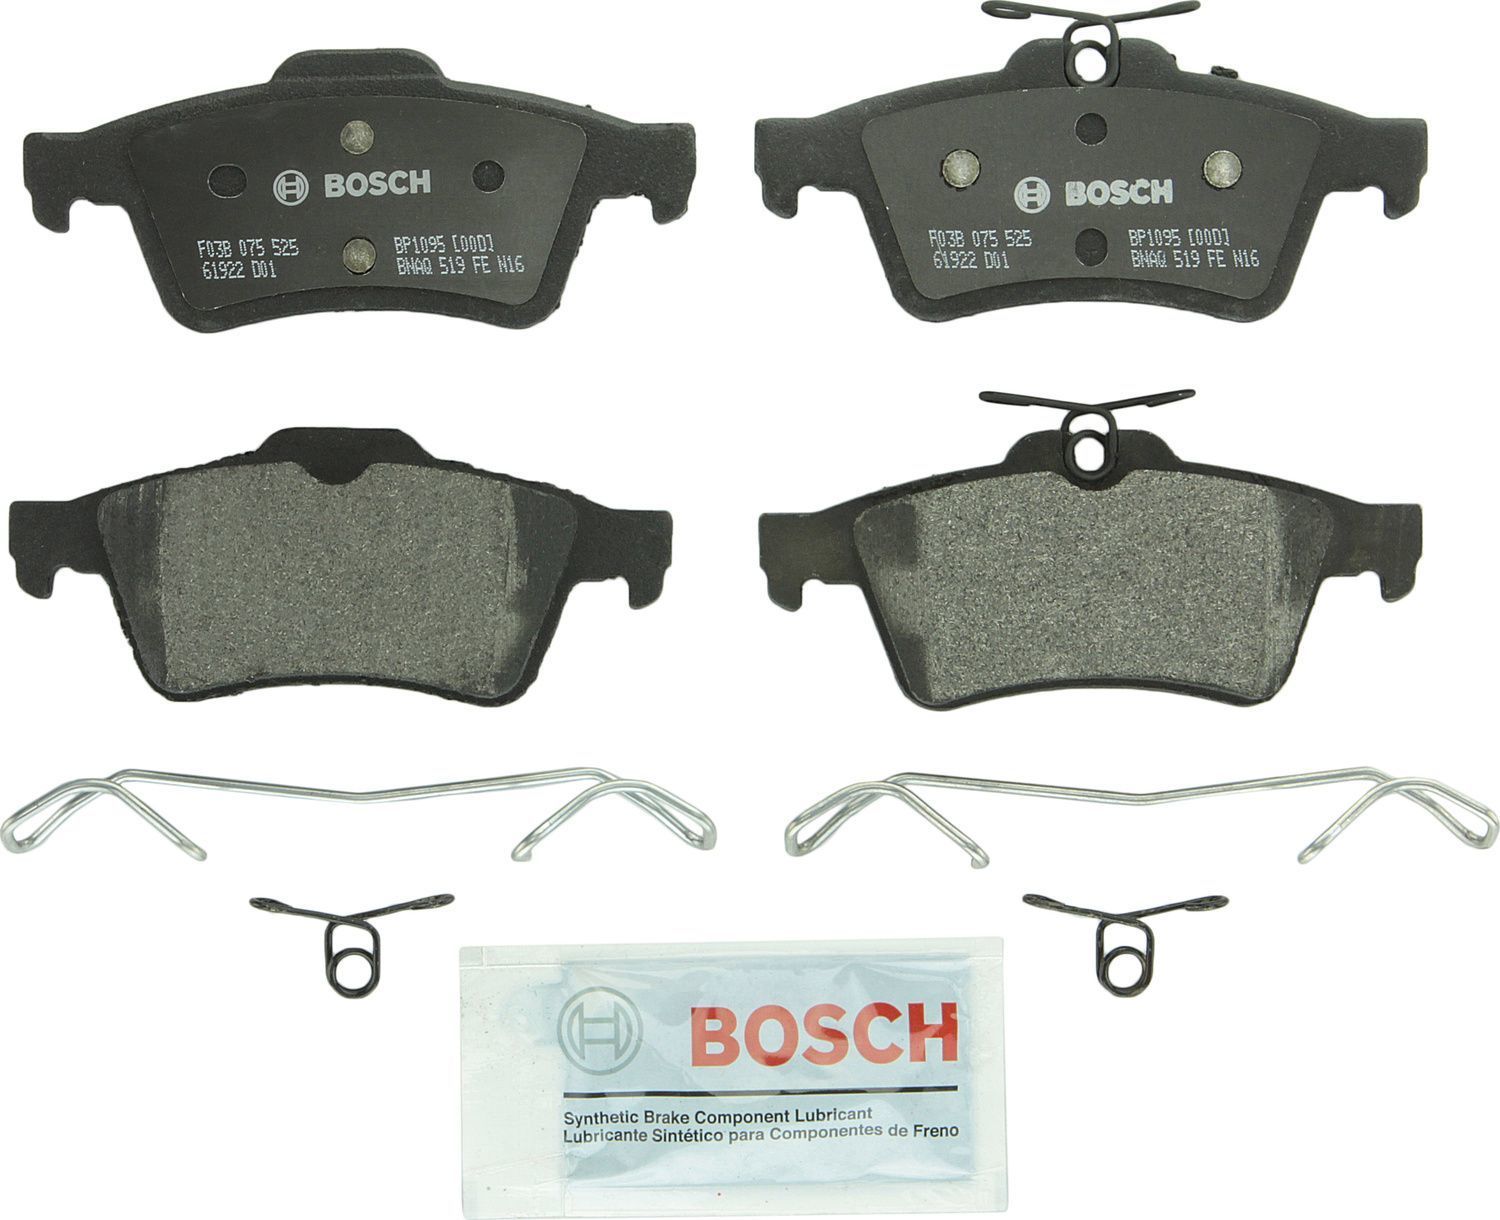 BOSCH BRAKE - Bosch QuietCast Semi-Metallic Brake Pads (Rear) - BQC BP1095